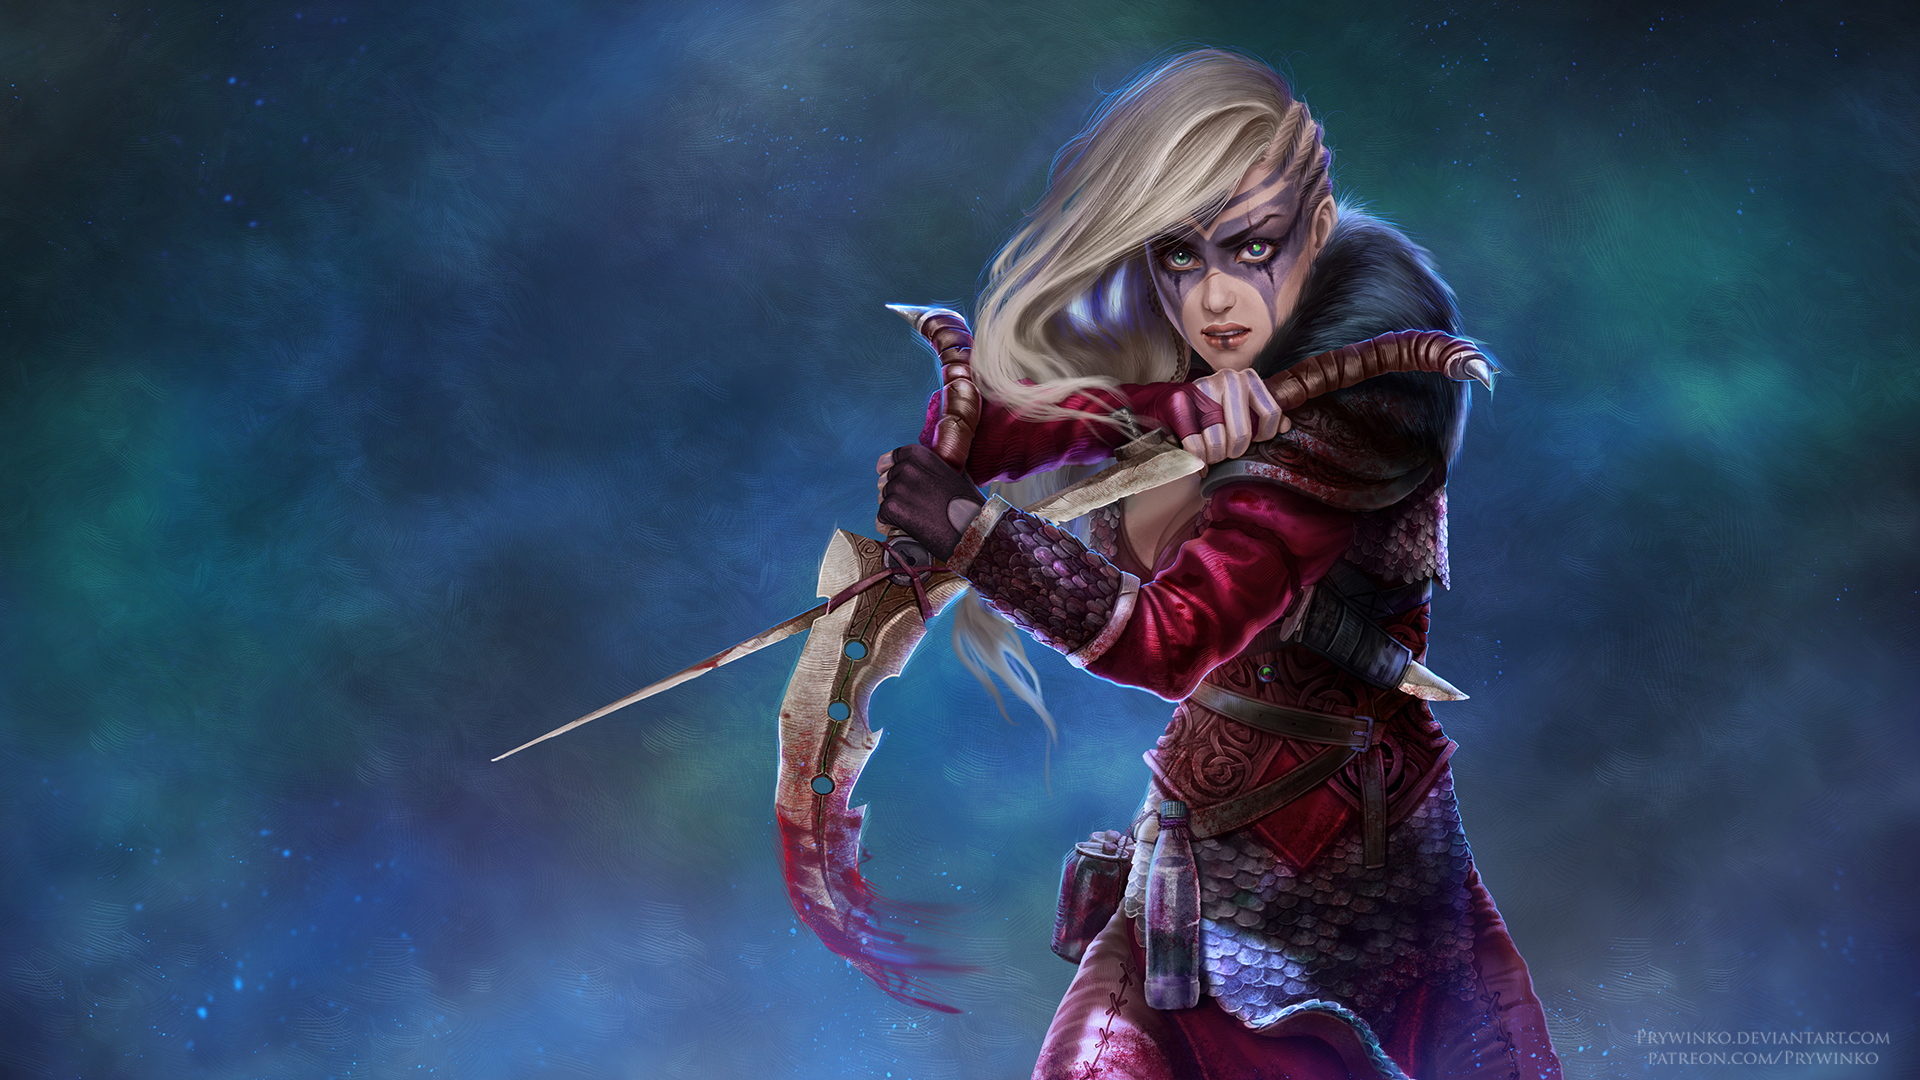 Blonde Dagger Girl Heterochromia Viking Woman Warrior 1920x1080